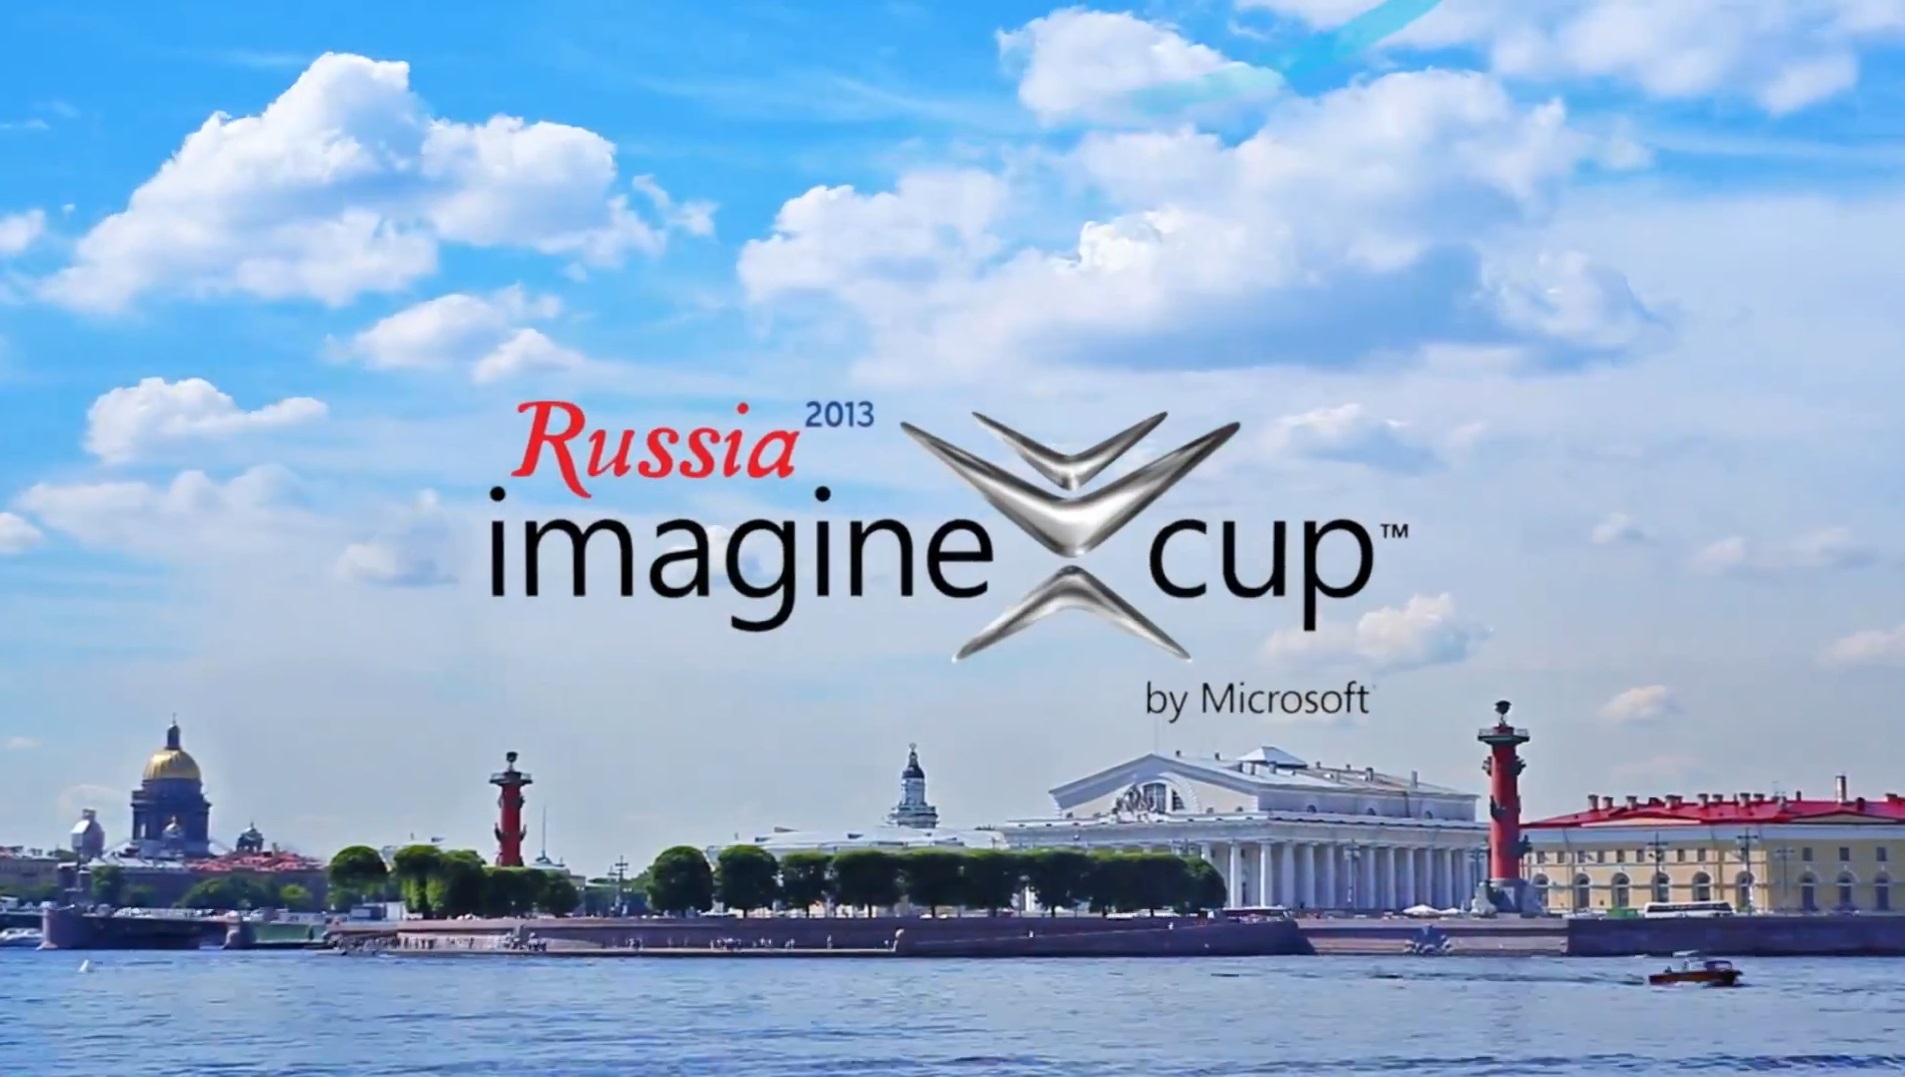 Вся россия 2013. Petersburg Cup 2013. Imagine Russia красота. Your Russia. Красота Imaginary Russia.